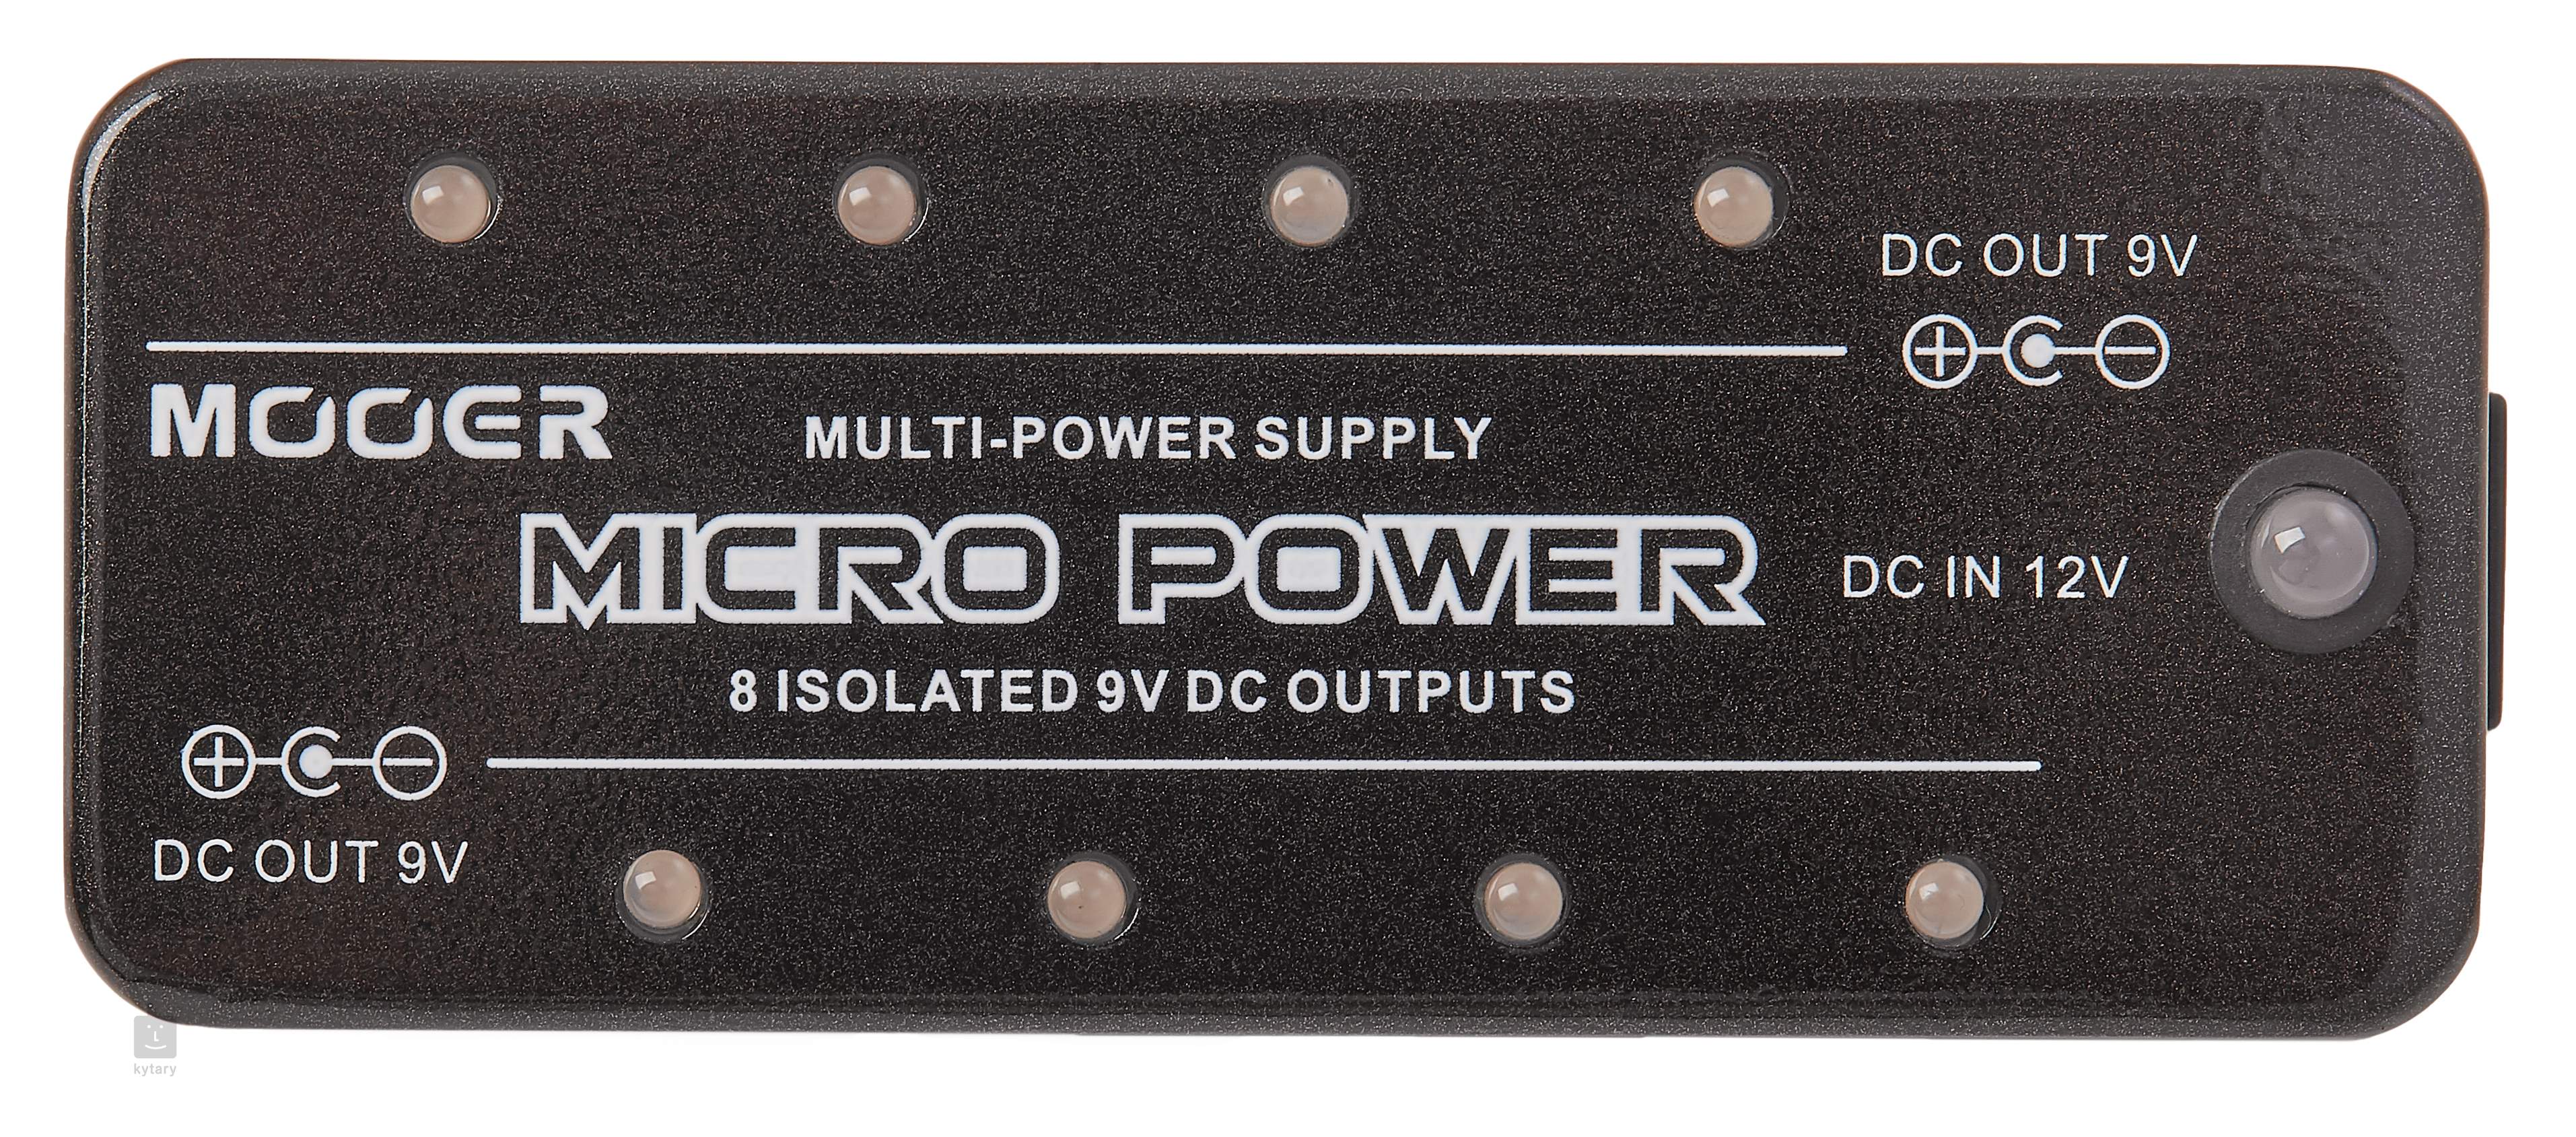 Mooer Micro Power. Mooer Power Supply Micro. Mooer mbf1 Micro. Mooer Micro Drummer. Micro power